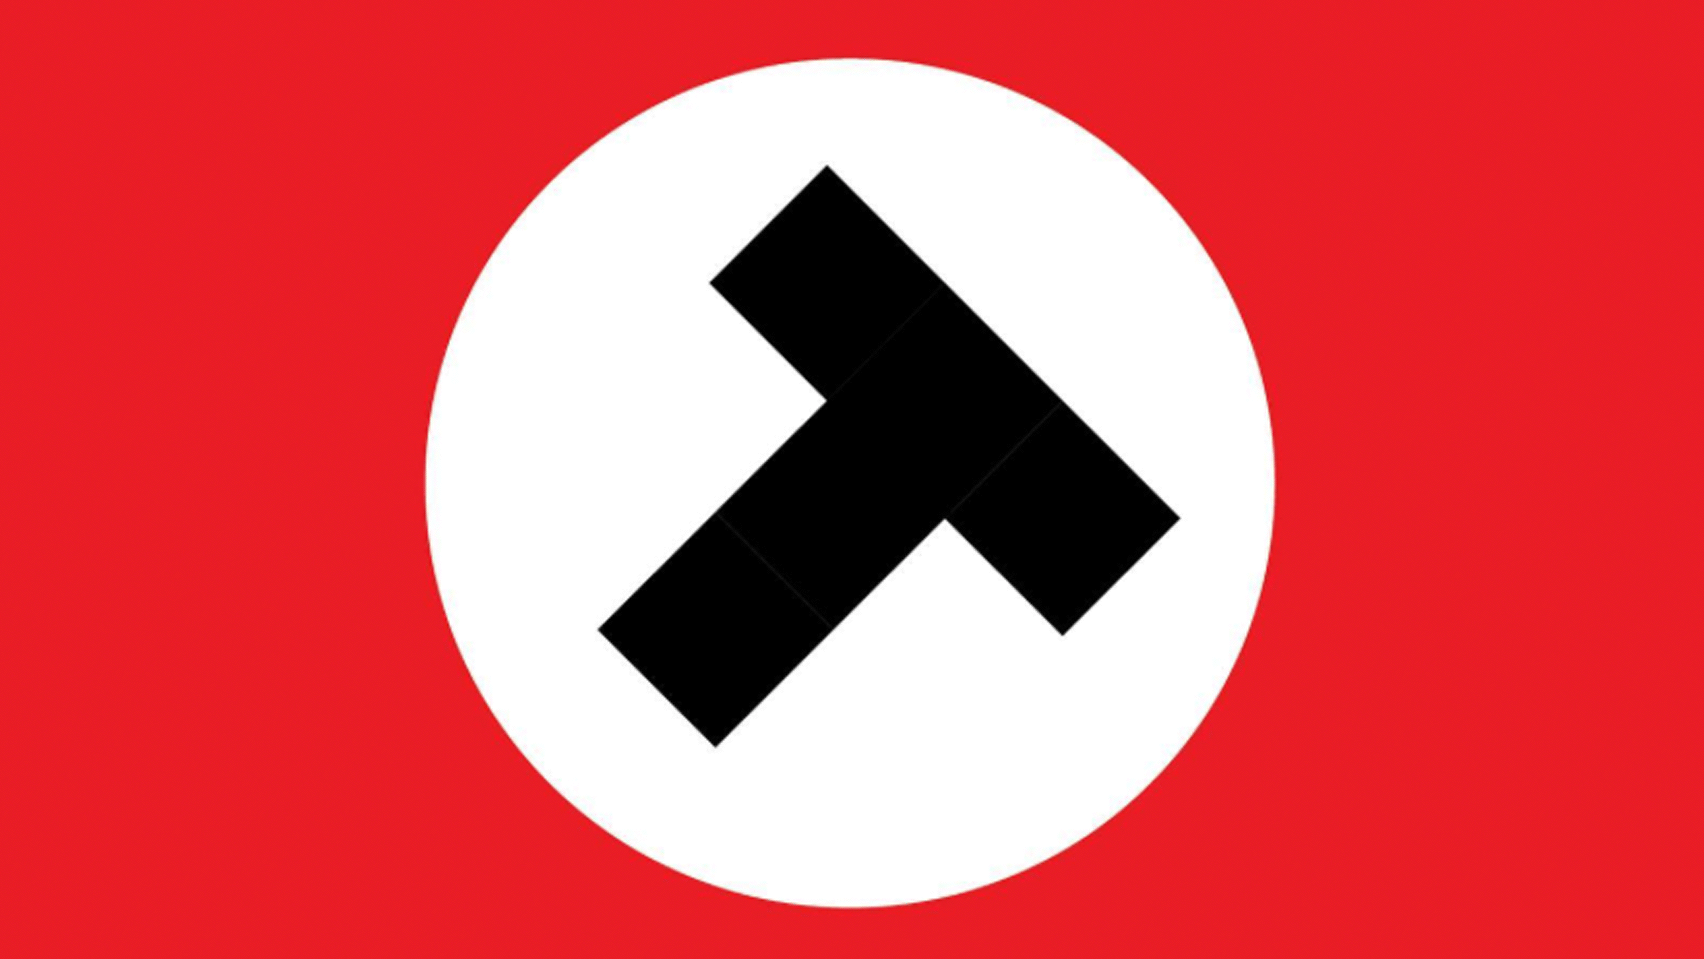 Tucker Viemeister proposes Nazi-style logo for Donald Trump